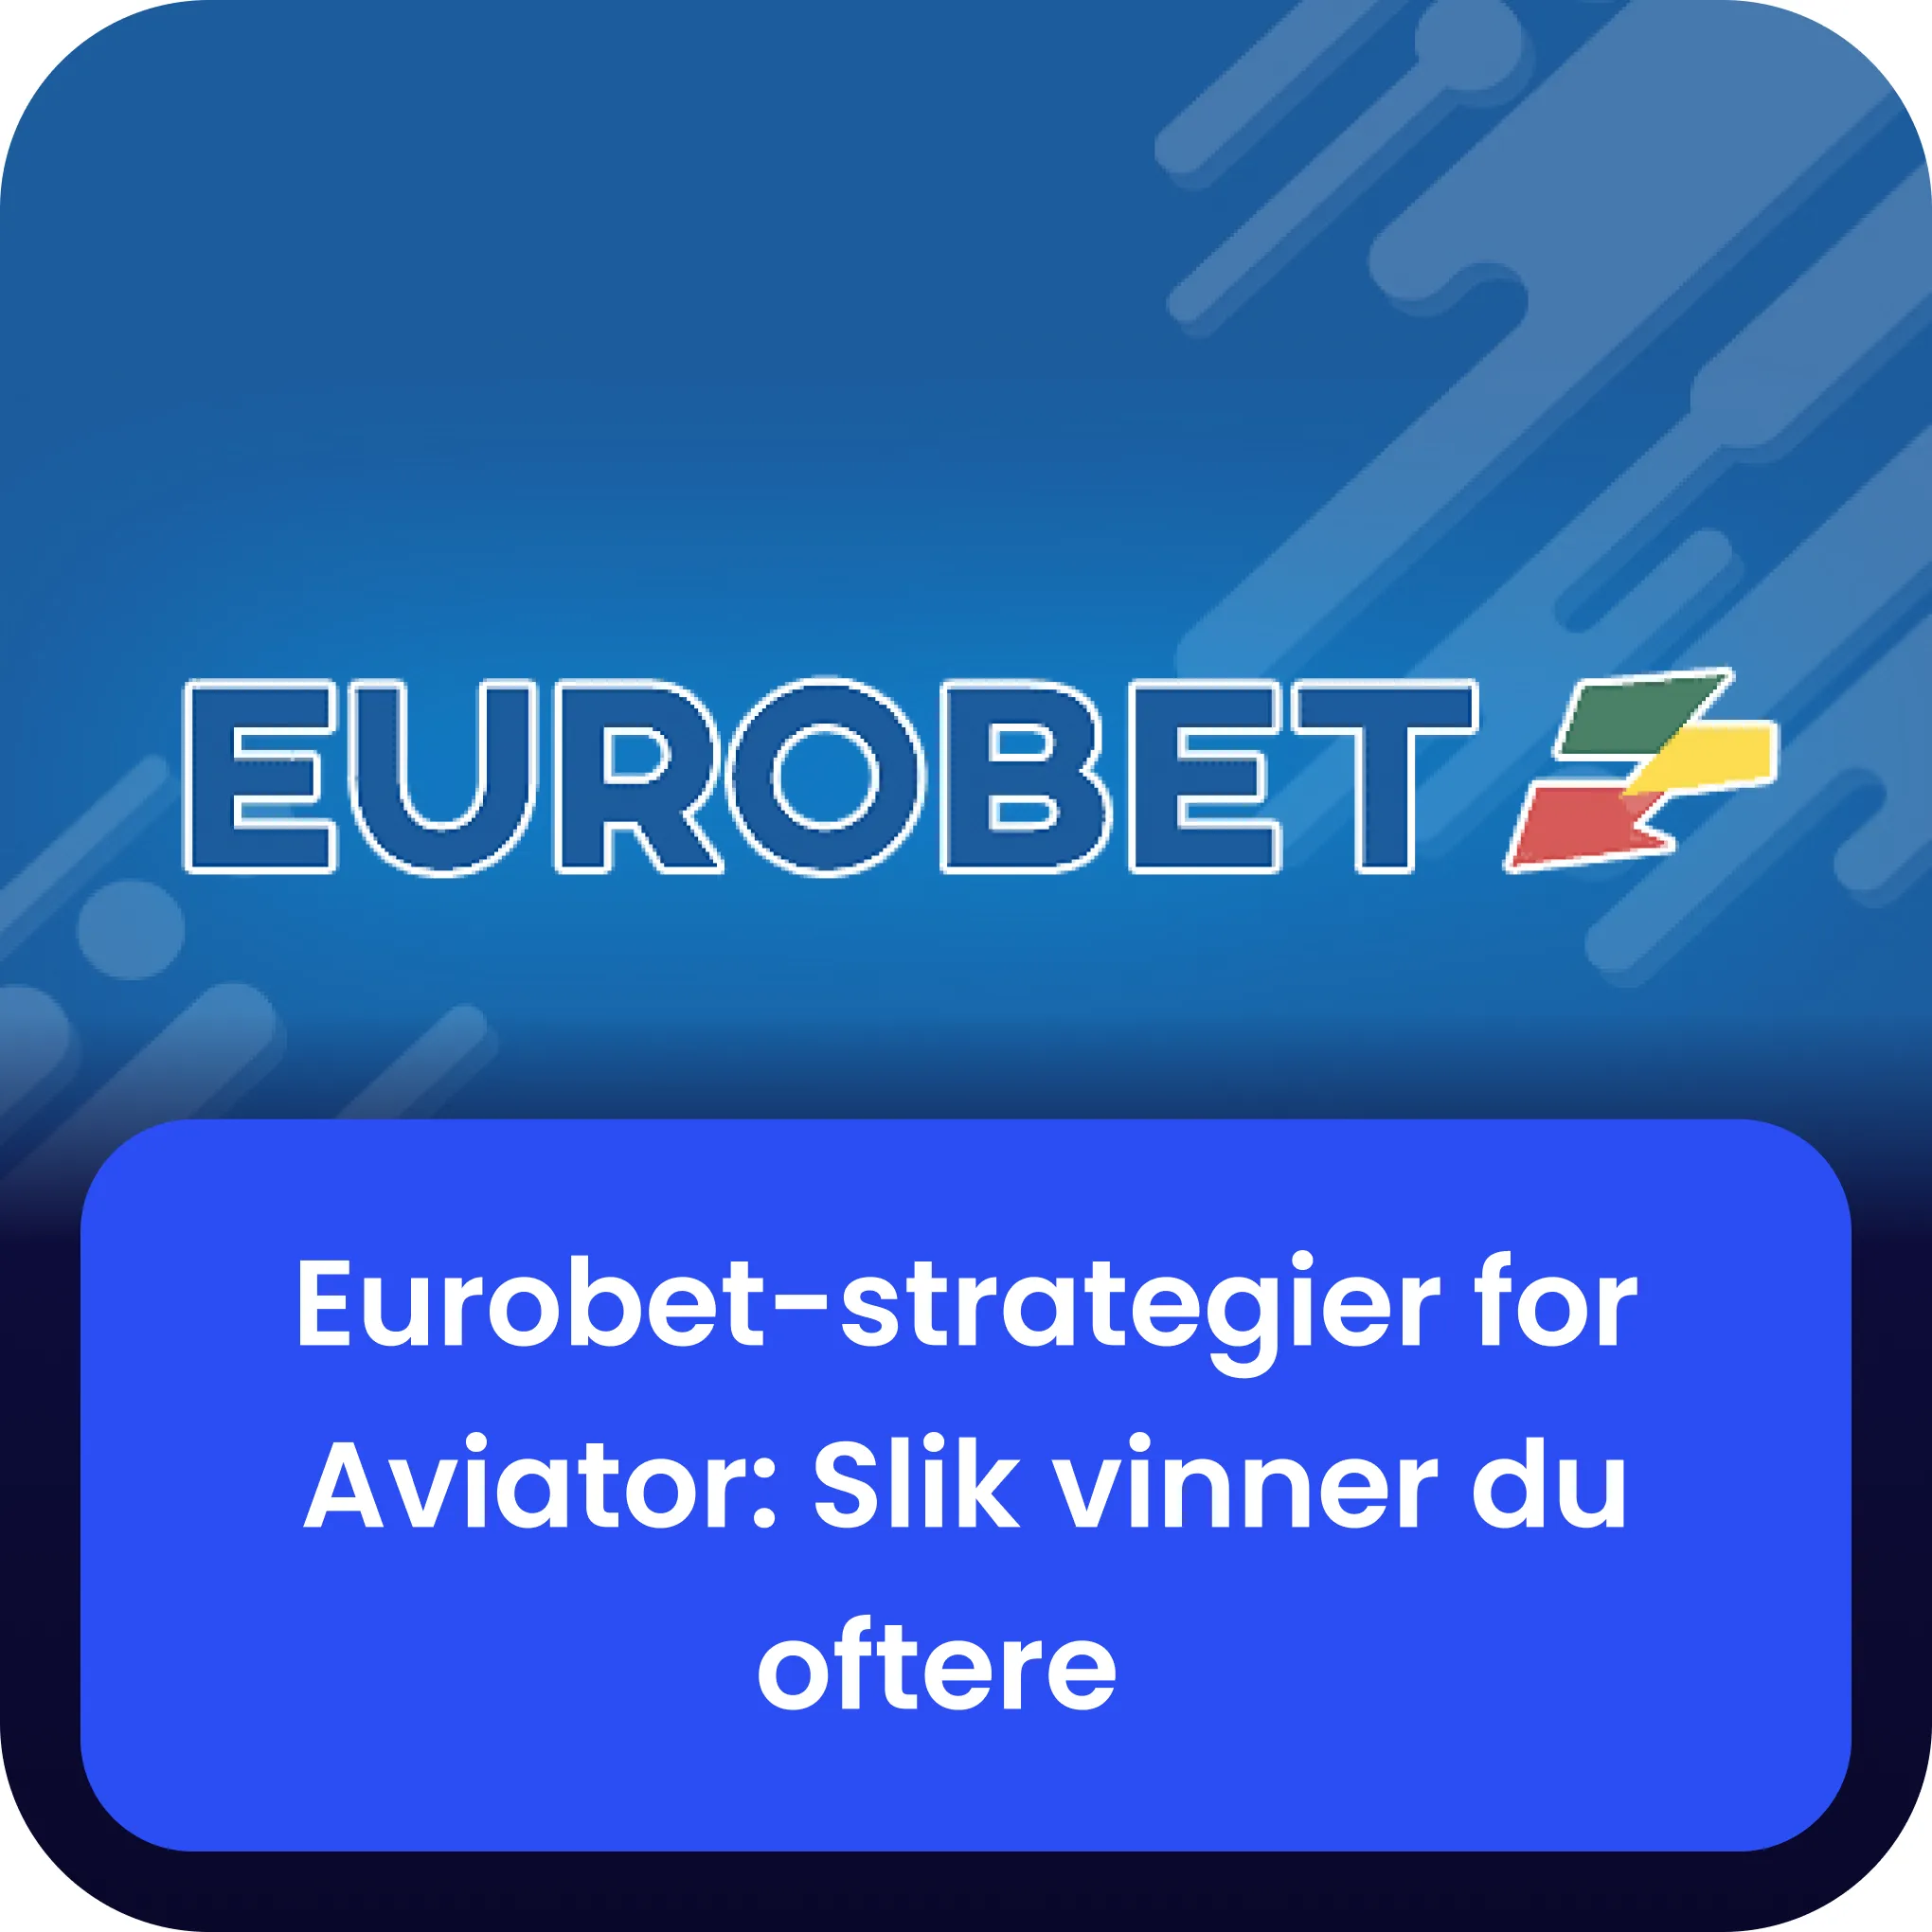 eurobet aviator strategier